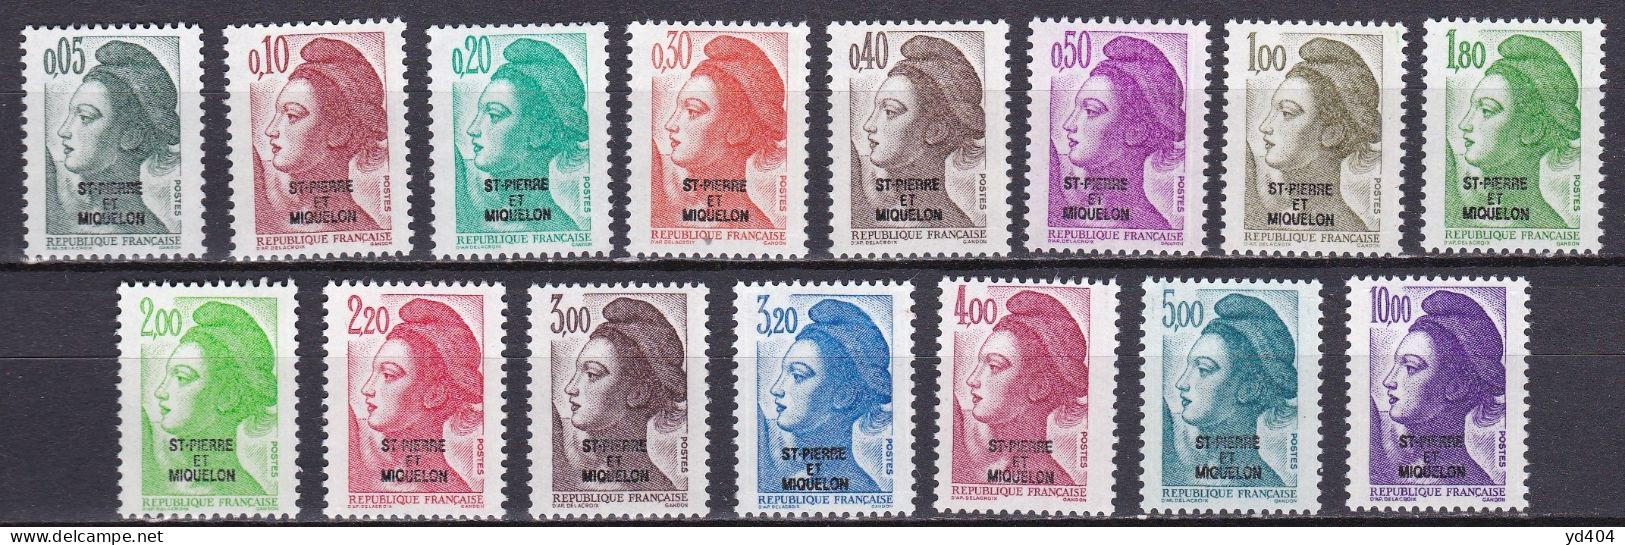 PM-210 – ST PIERRE & MIQUELON – 1986 – DEFINITIVE ISSUE – Y&T # 455/69 MNH 18 € - Unused Stamps